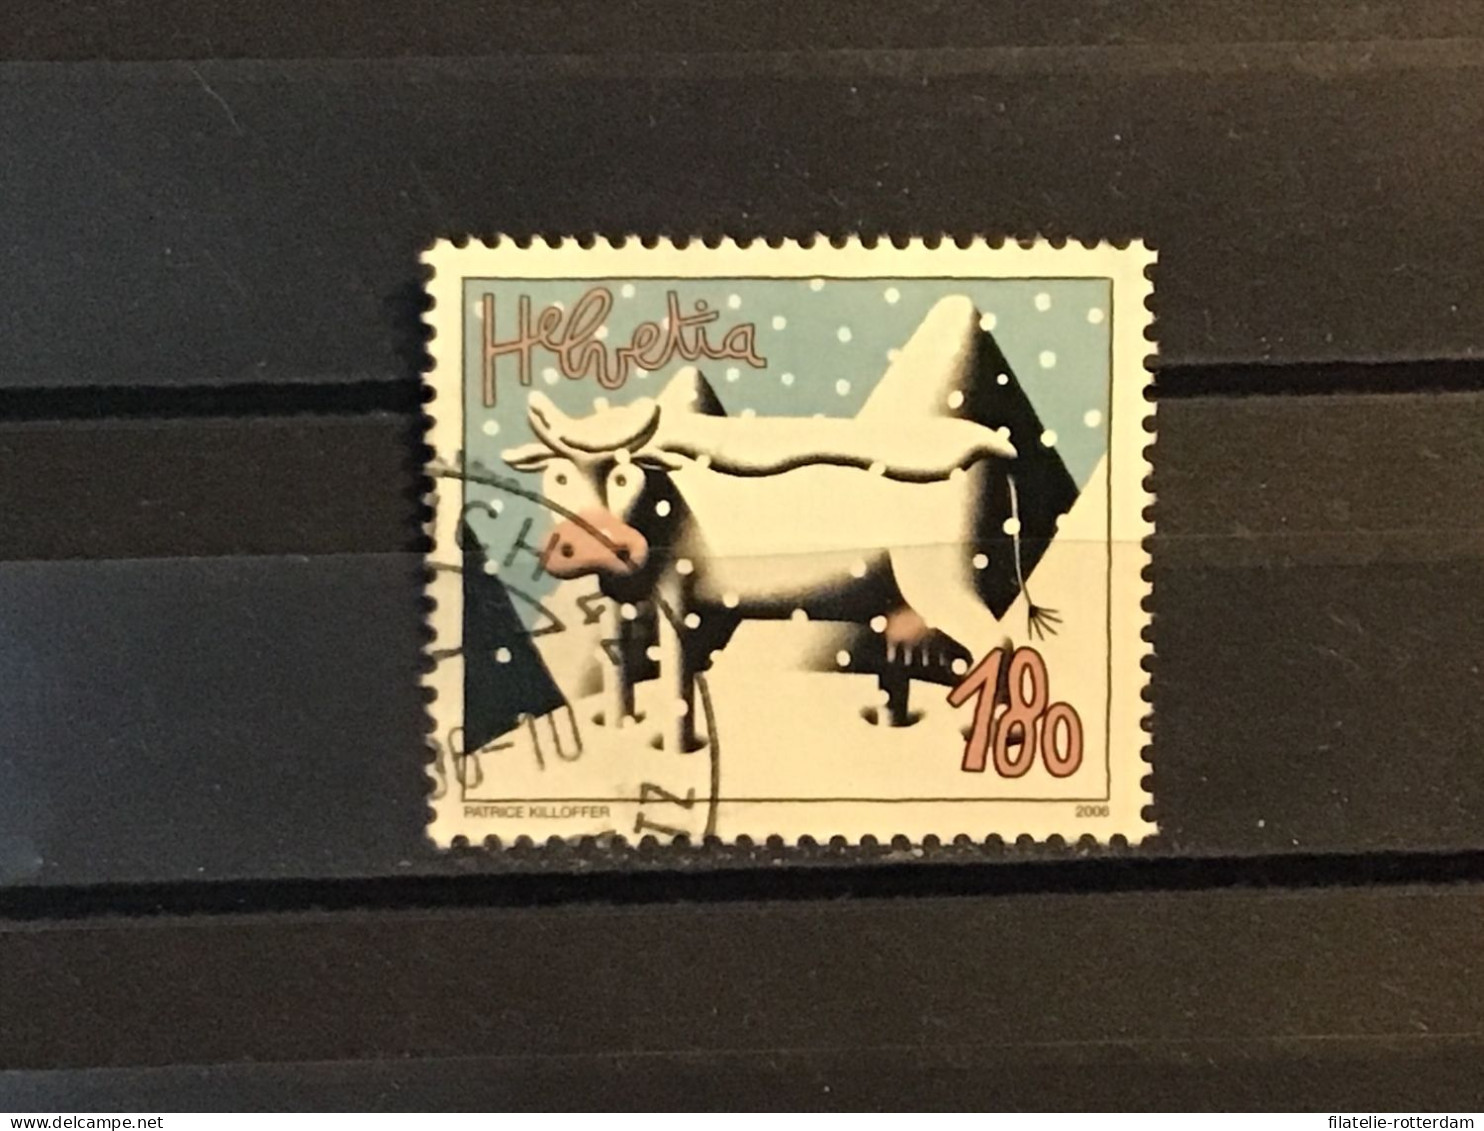 Switzerland / Zwitserland - Cow (180) 2006 - Gebruikt